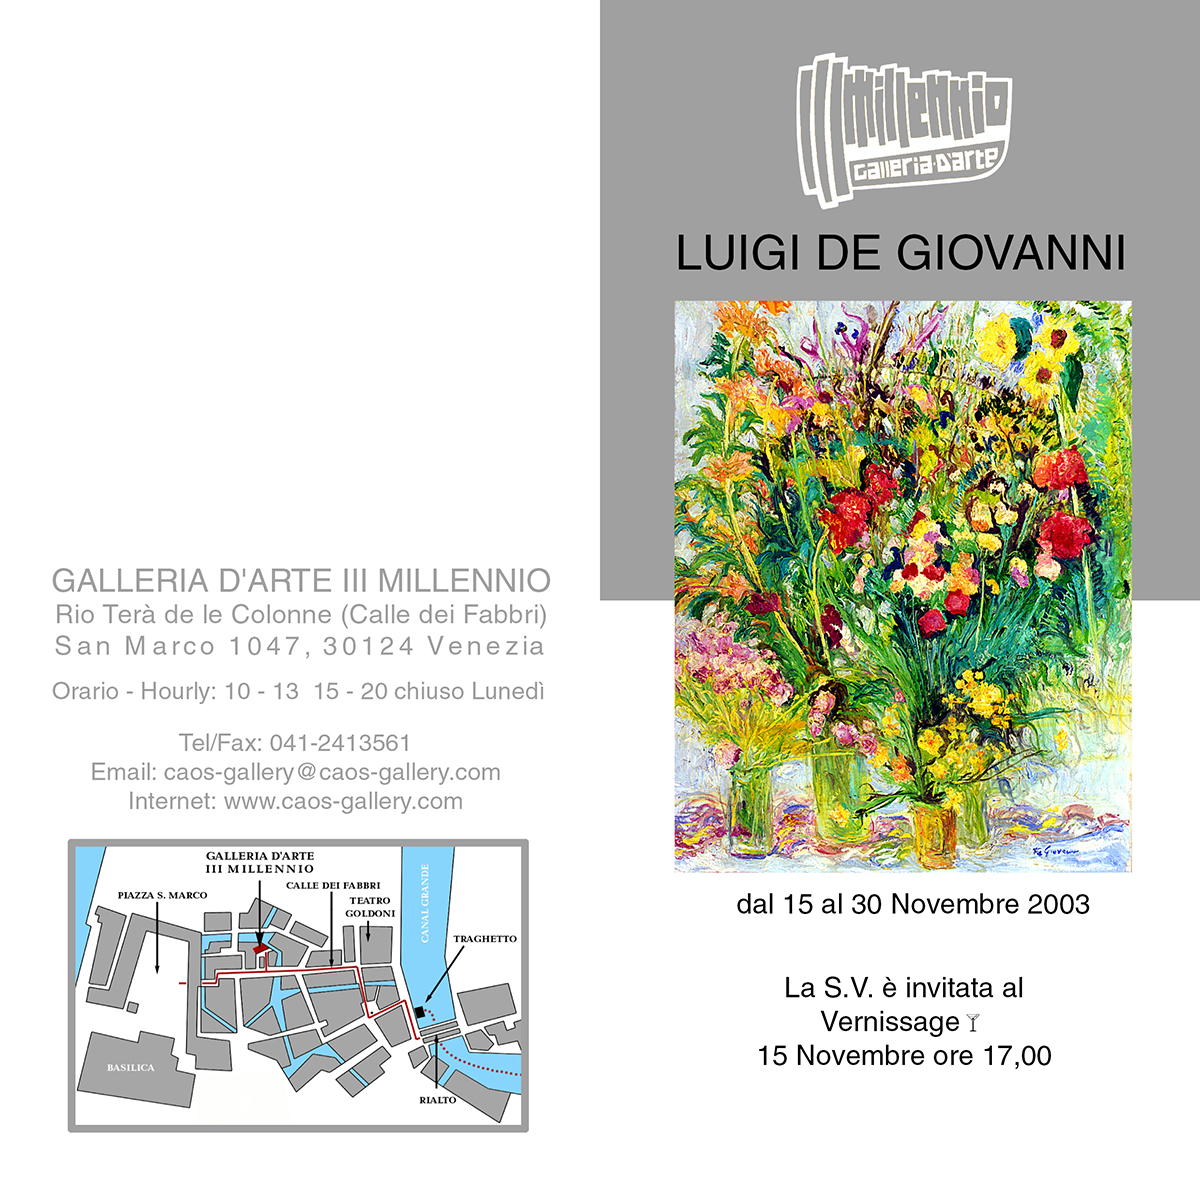 de giovanni flowers invito galleria arte terzo millennio gallery art third millennium